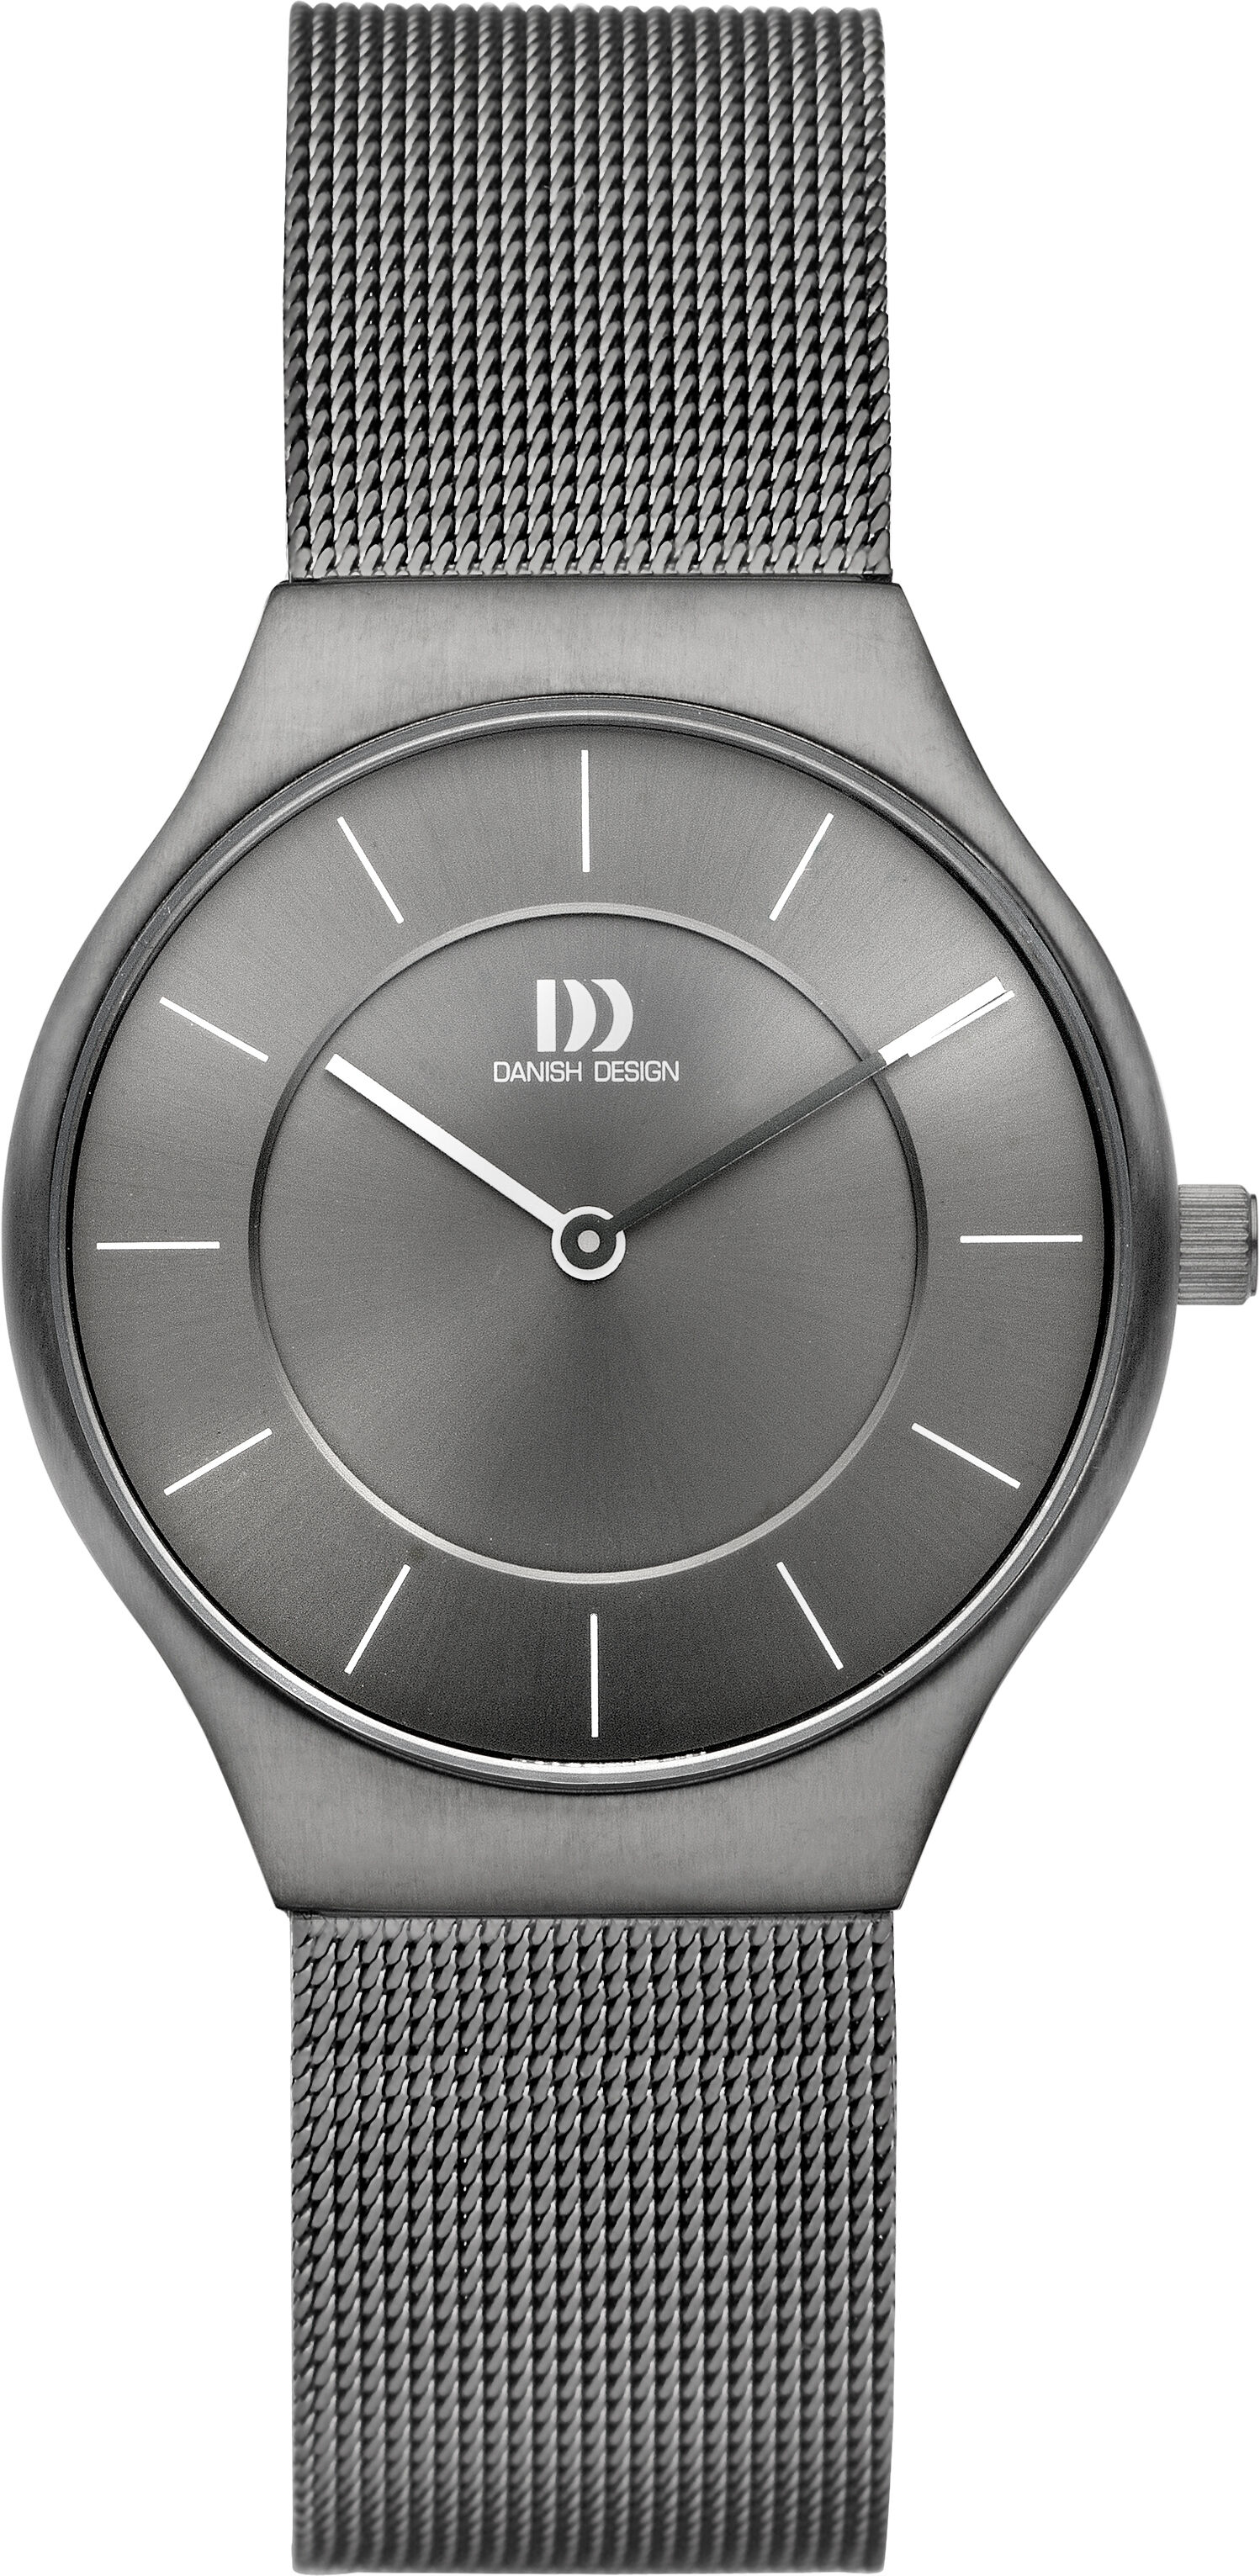 Danish Design Horloge 34 mm Stainless Steel IV66Q1259